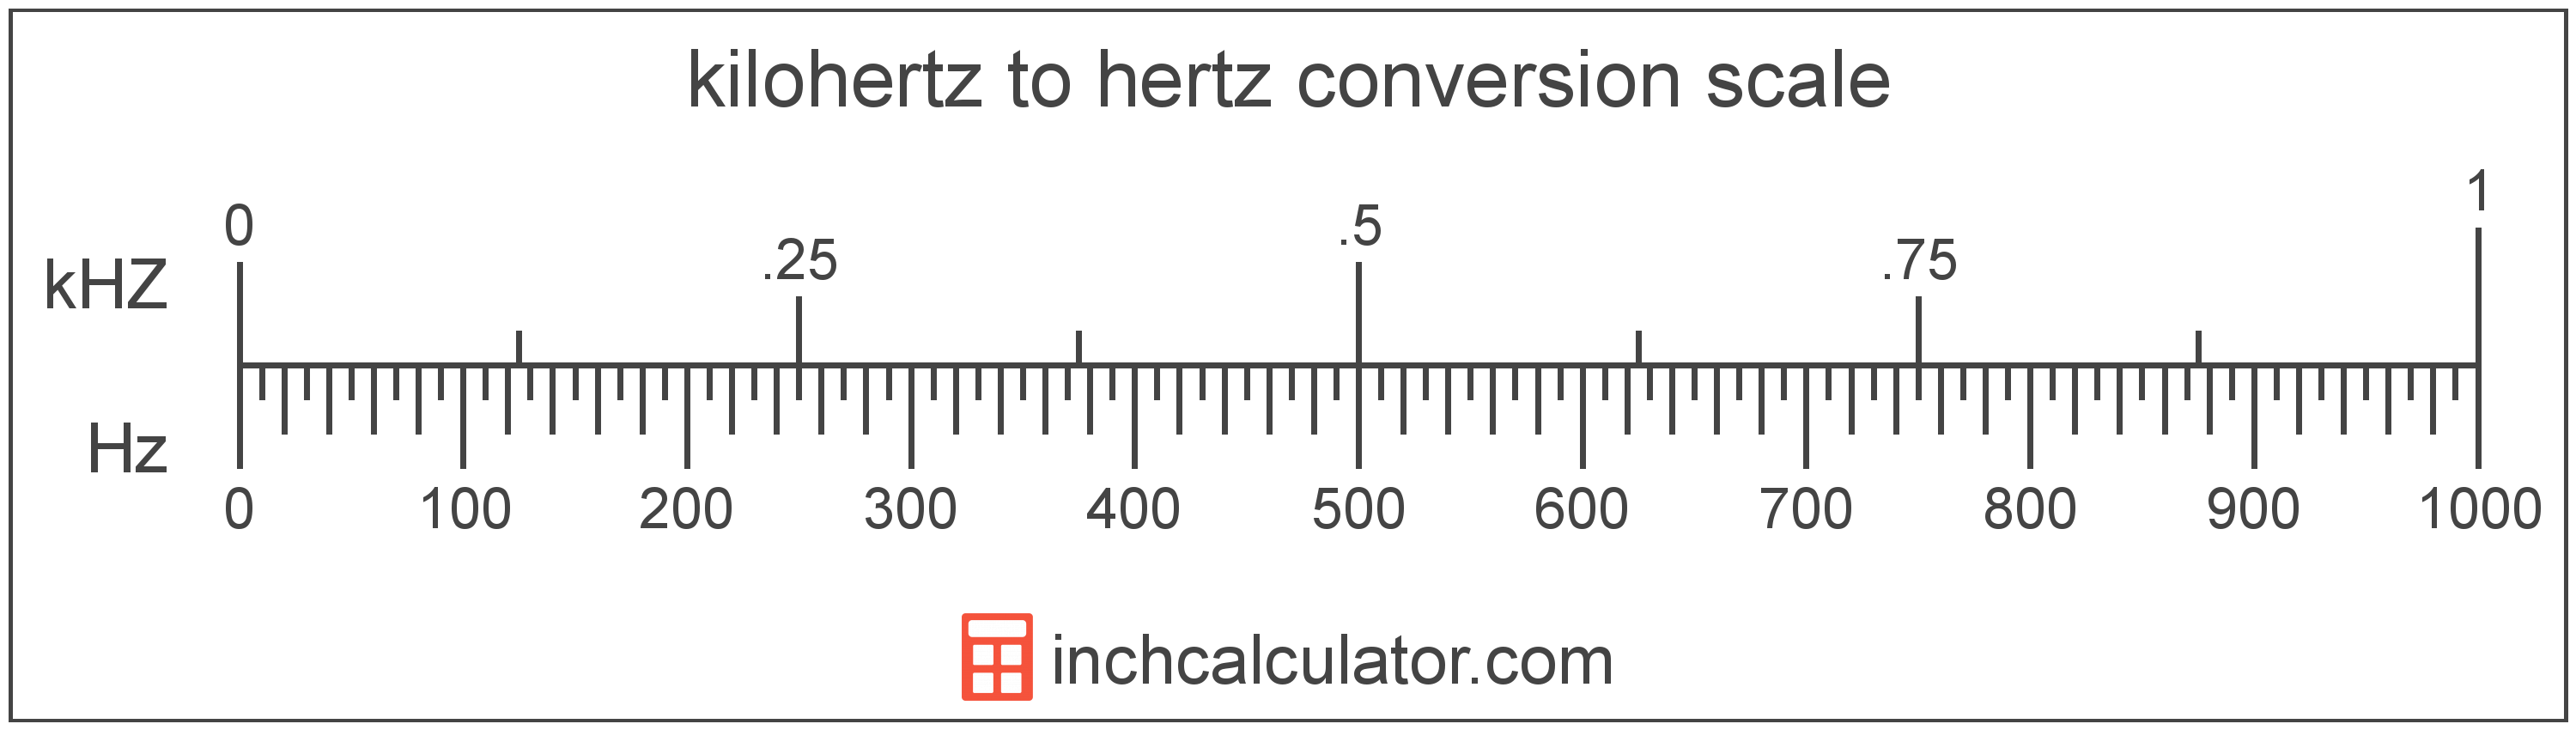 hertz-to-kilohertz-conversion-hz-to-khz-inch-calculator